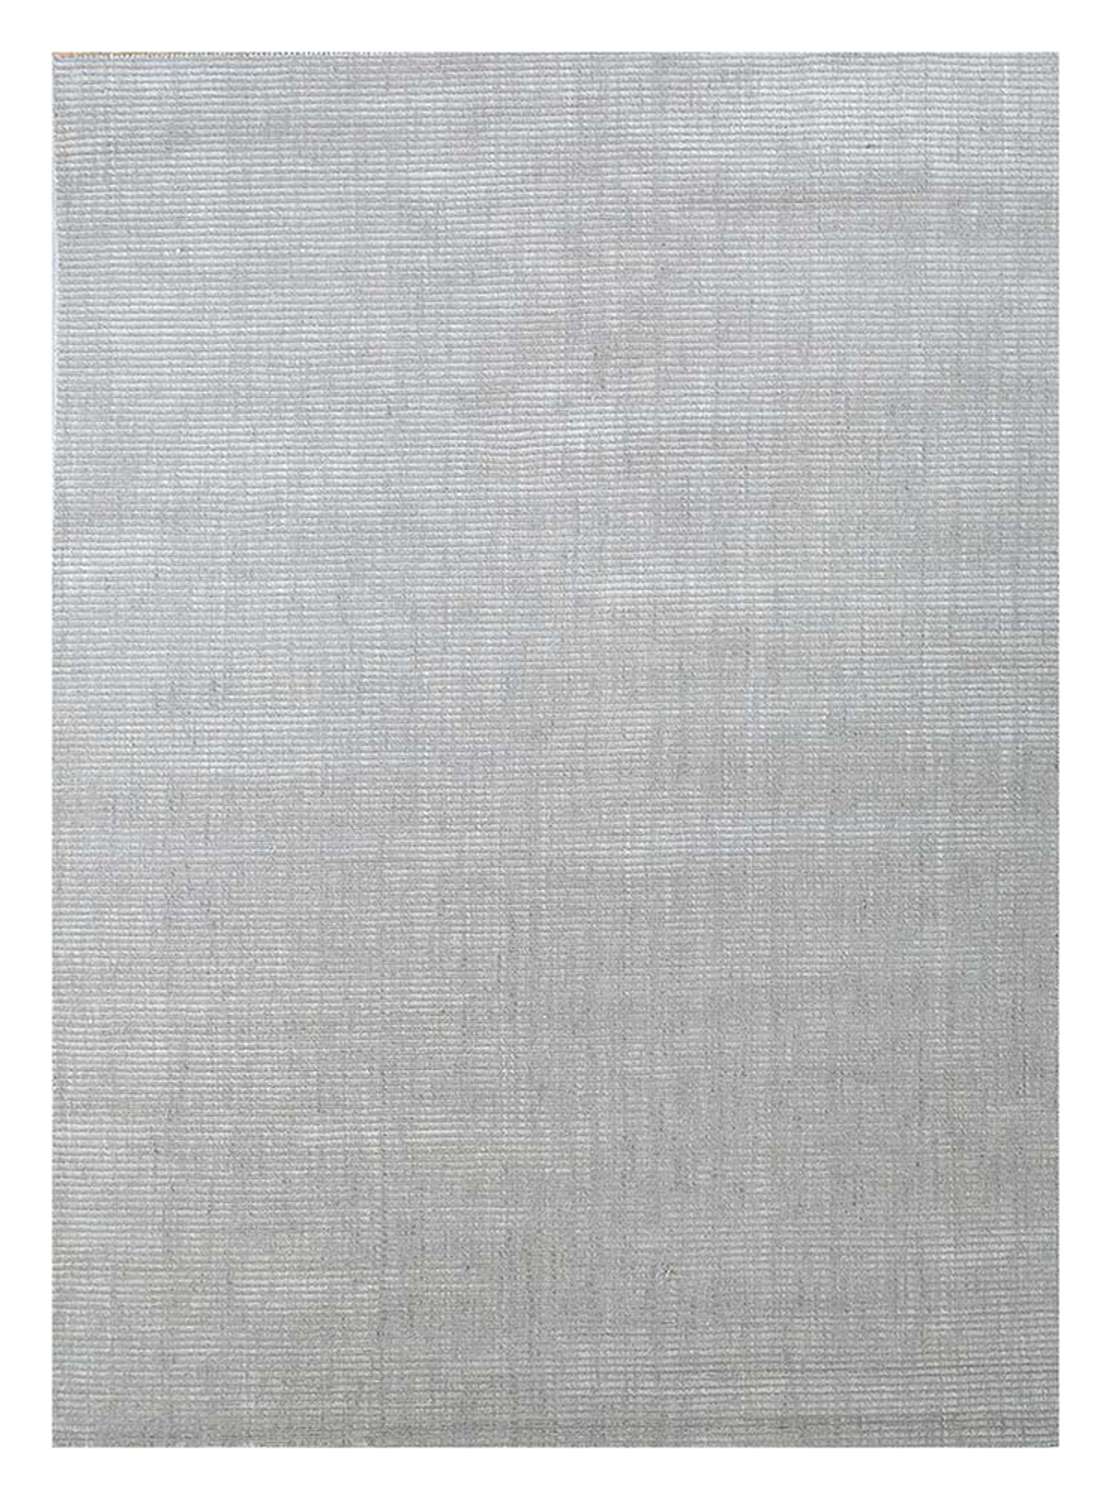 Wollen tapijt - 240 x 150 cm - lichtgrijs